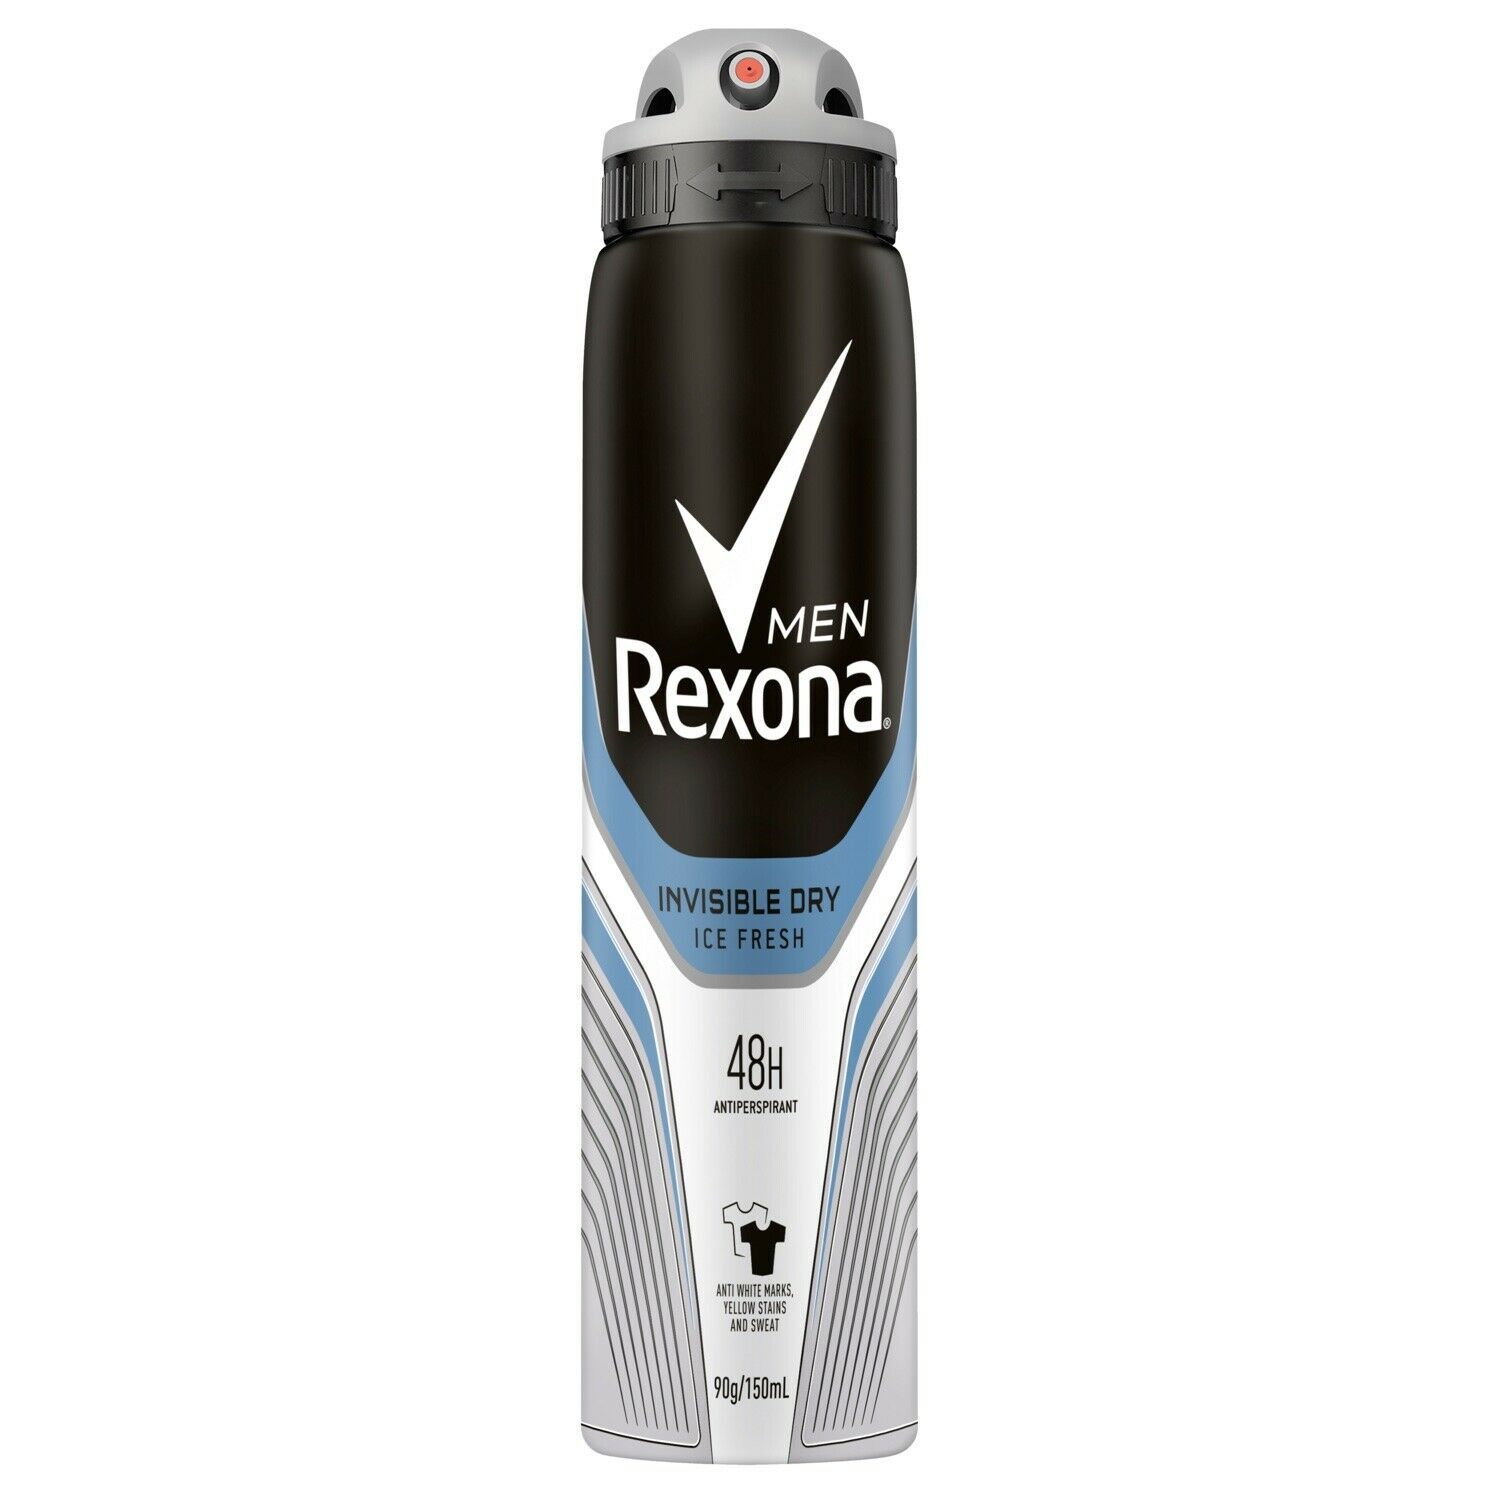 Rexona Men INVISIBLE Ice FRESH no stains antiperspirant spray 150ml- FREE SHIP